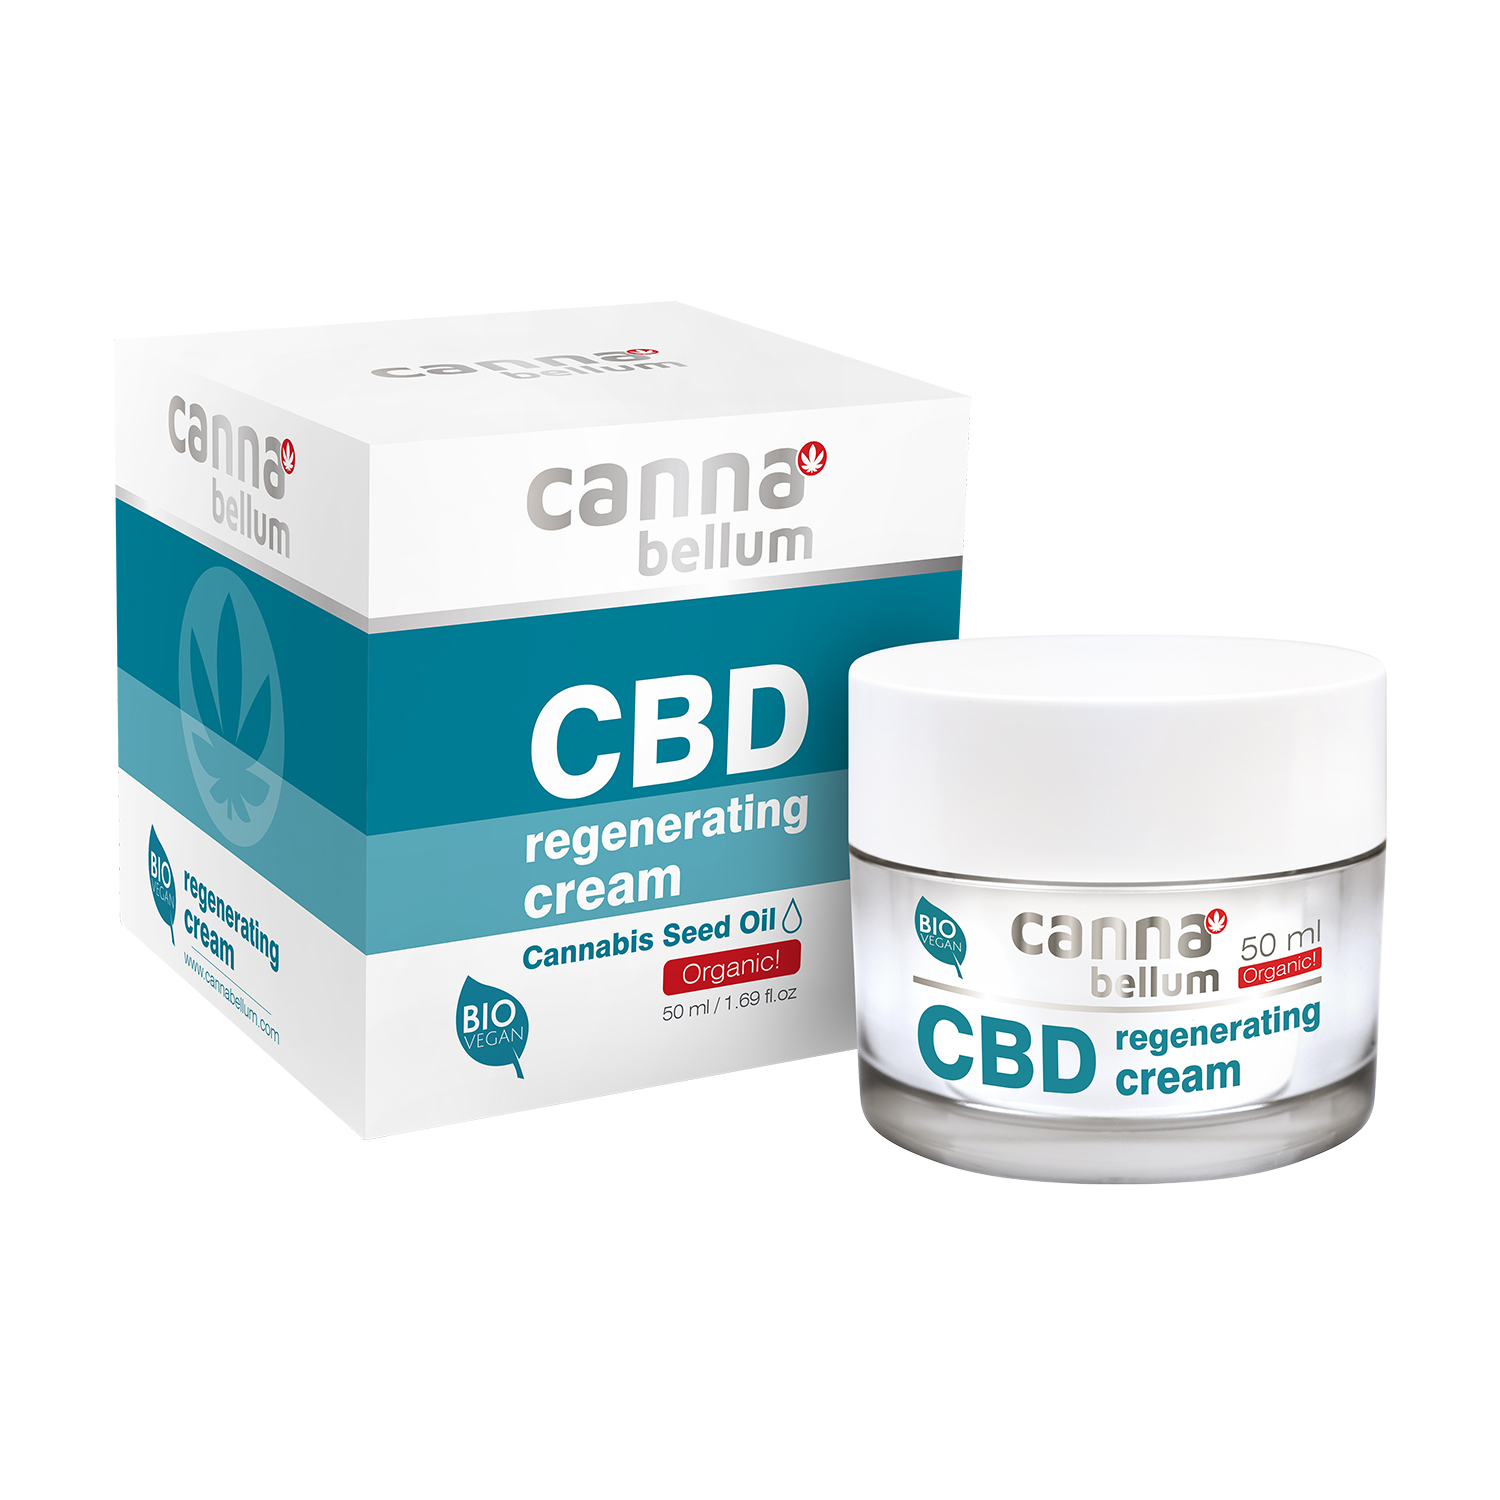 Cannabellum CBD regenerating cream 50ml P1253 komplet WEB 104